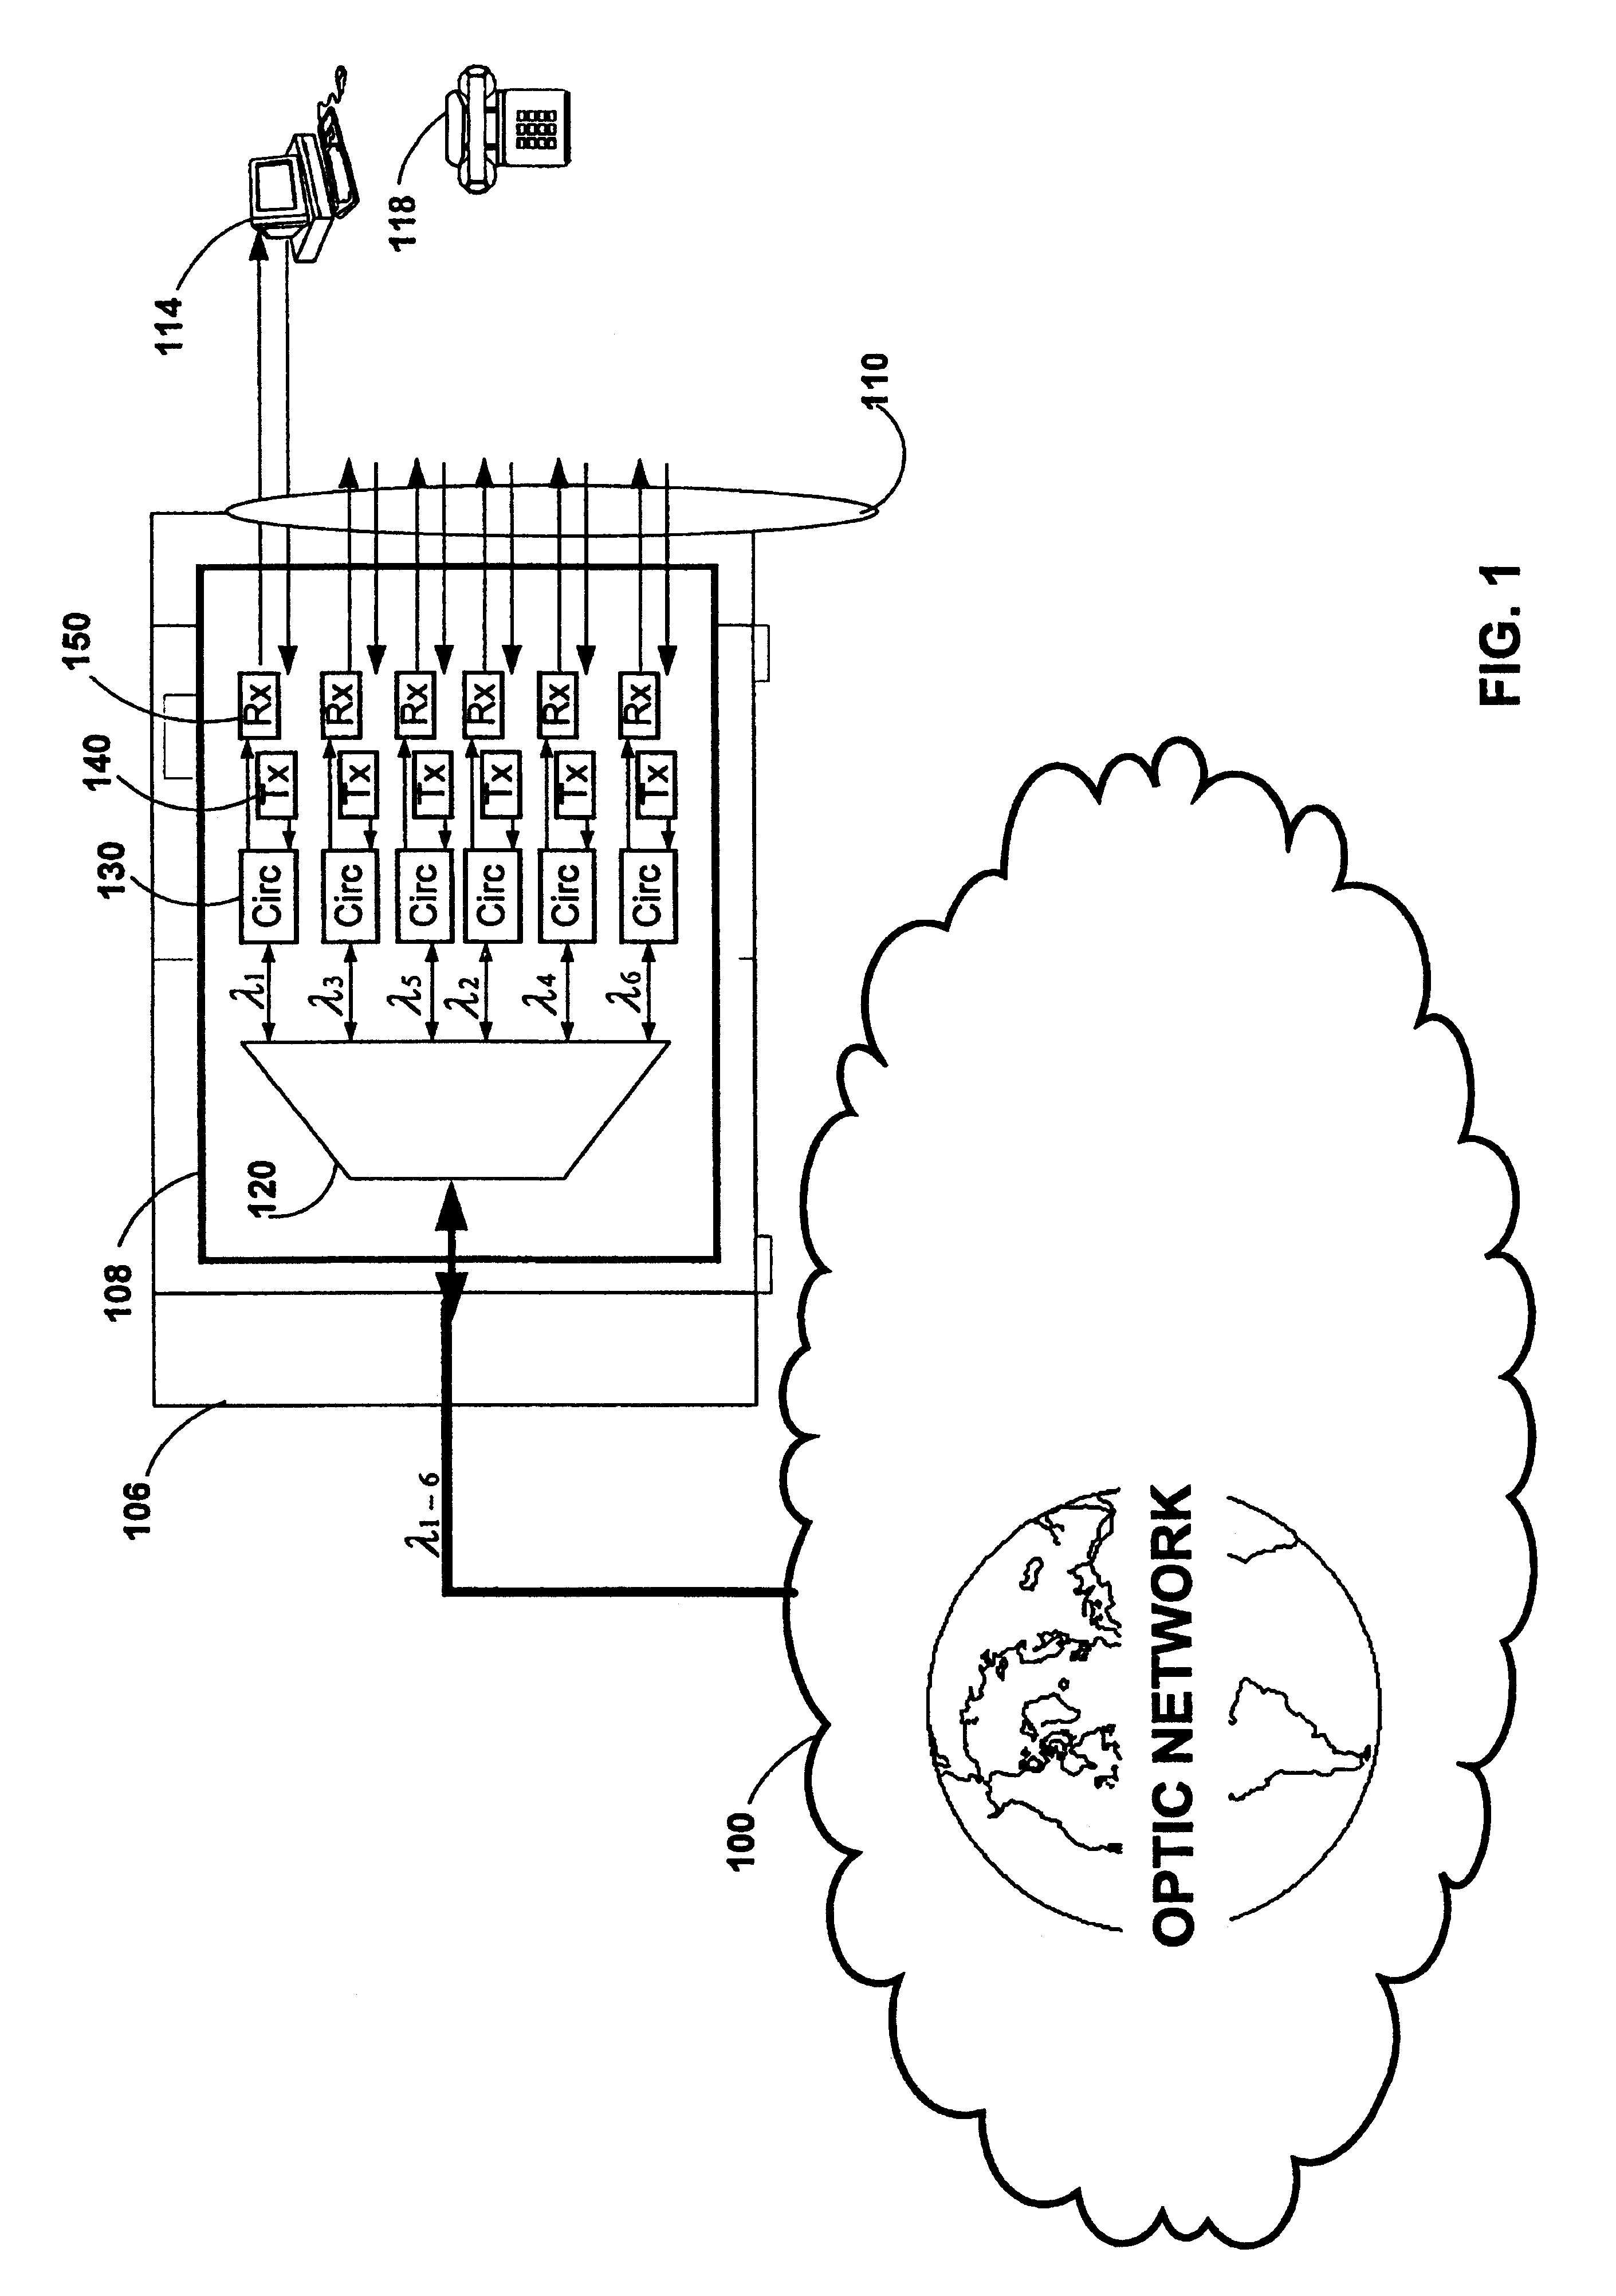 Tunable laser transmitter with internal wavelength grid generators